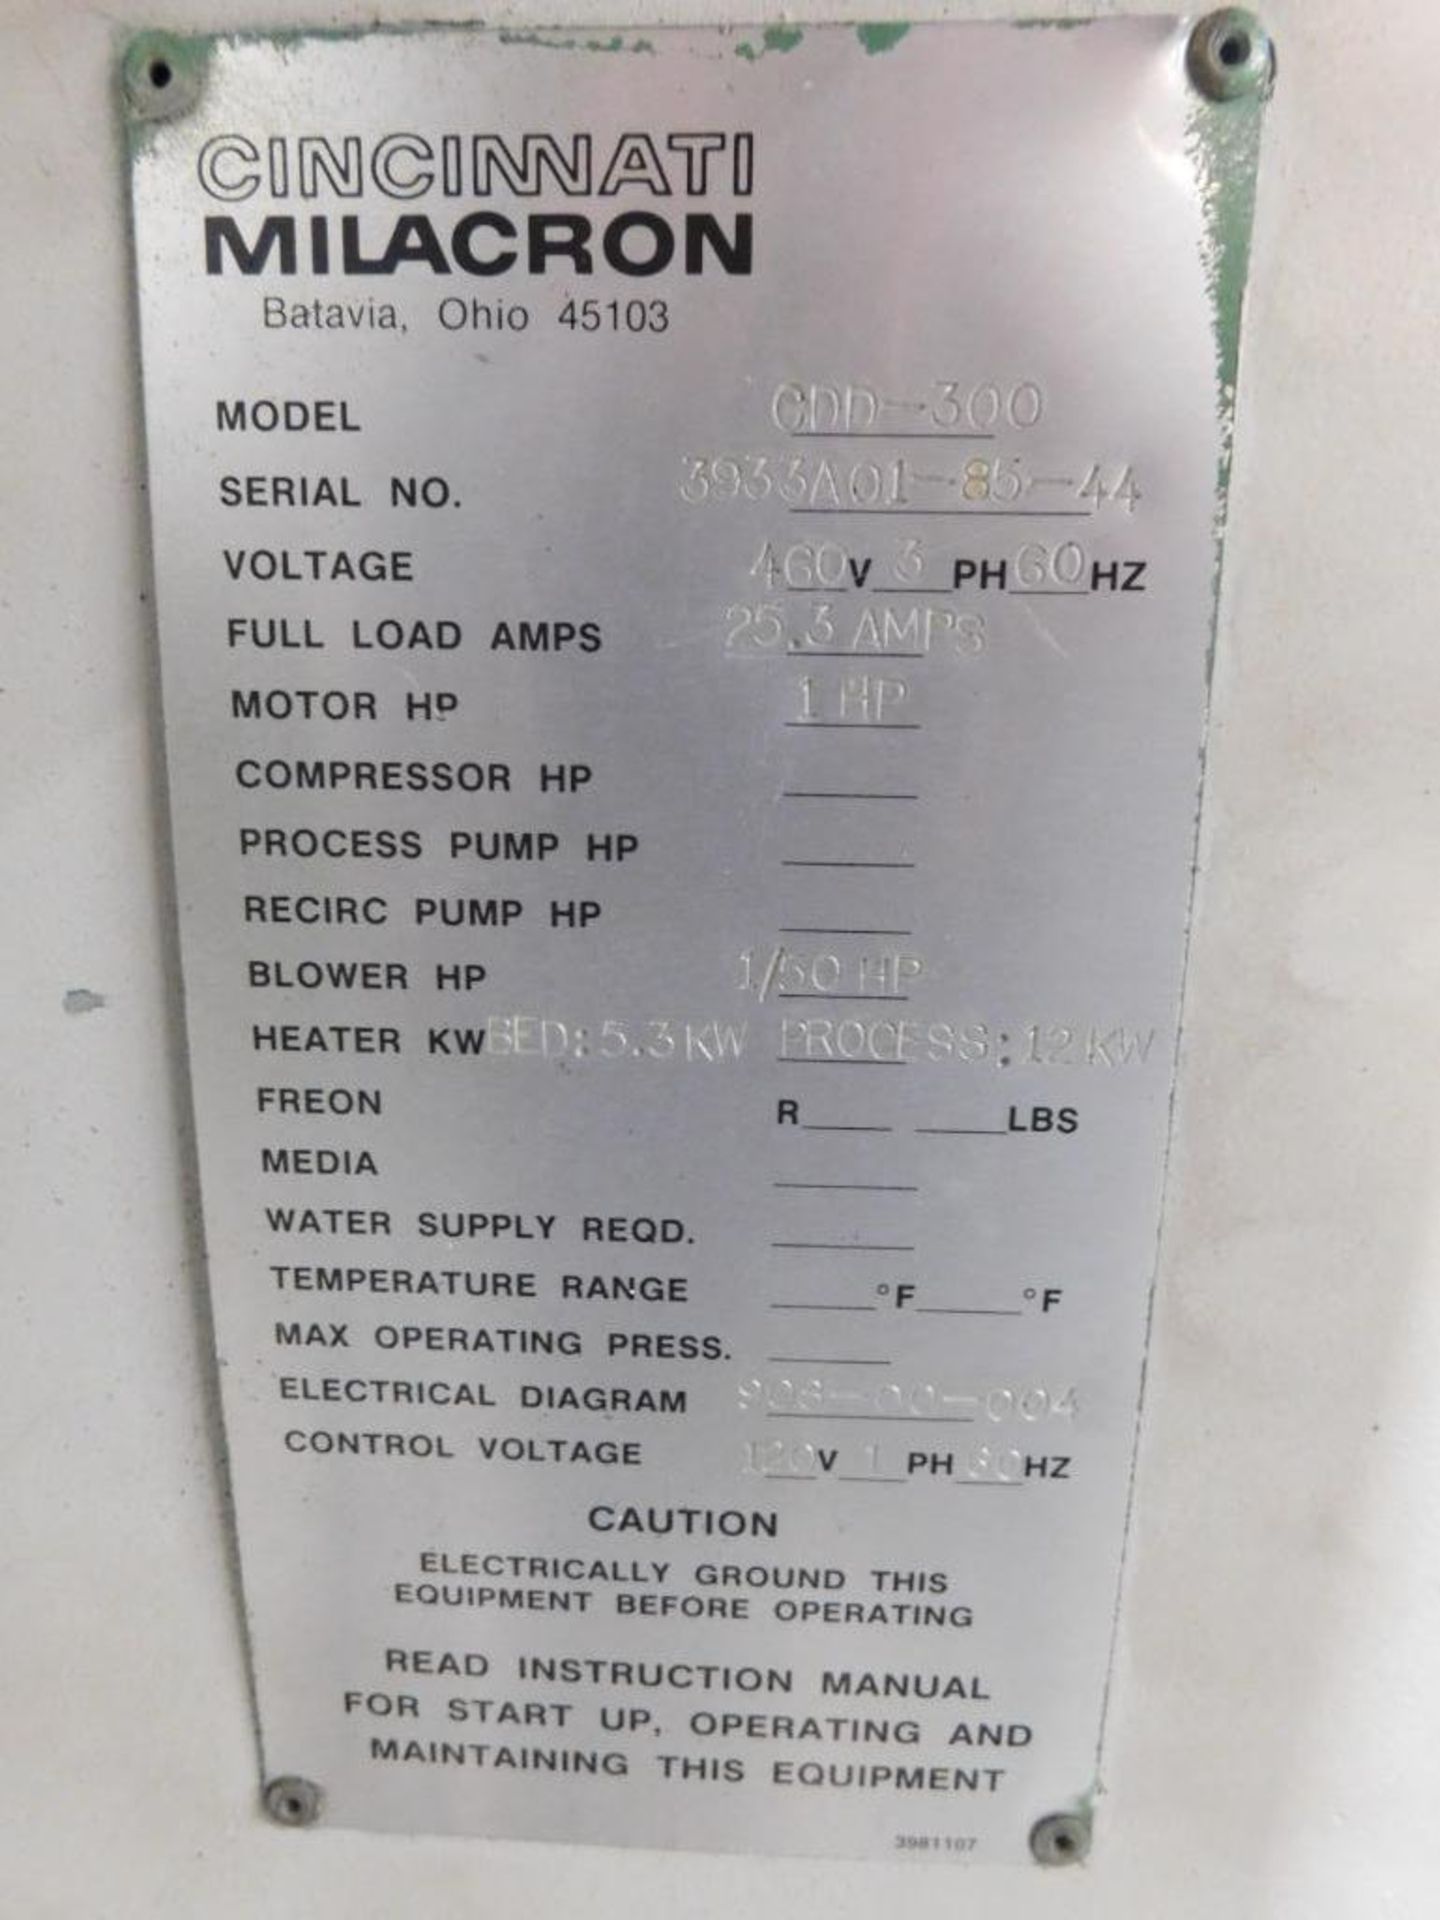 Cincinnati Milacron CDD-300 600 Lb. Portable Material Dryer, S/N 393-3A01-85-44 - Image 5 of 5